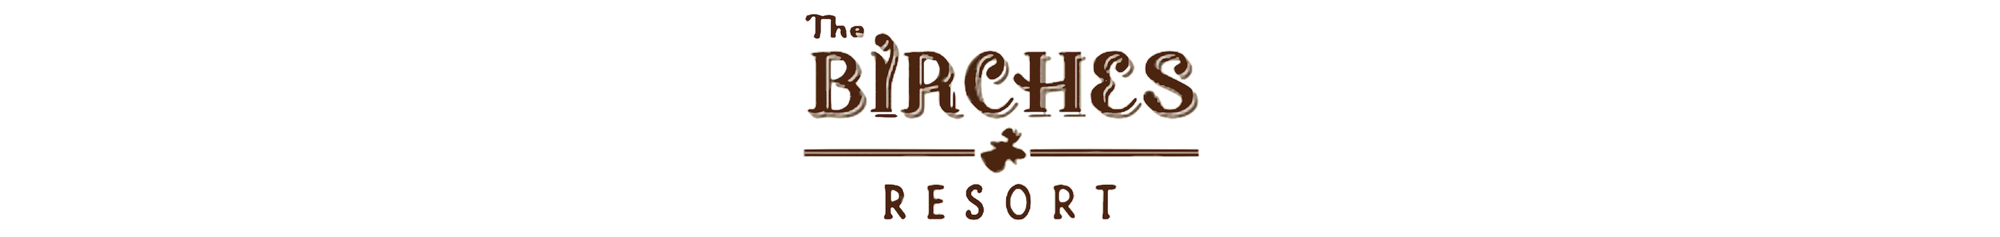 The Birches Resort